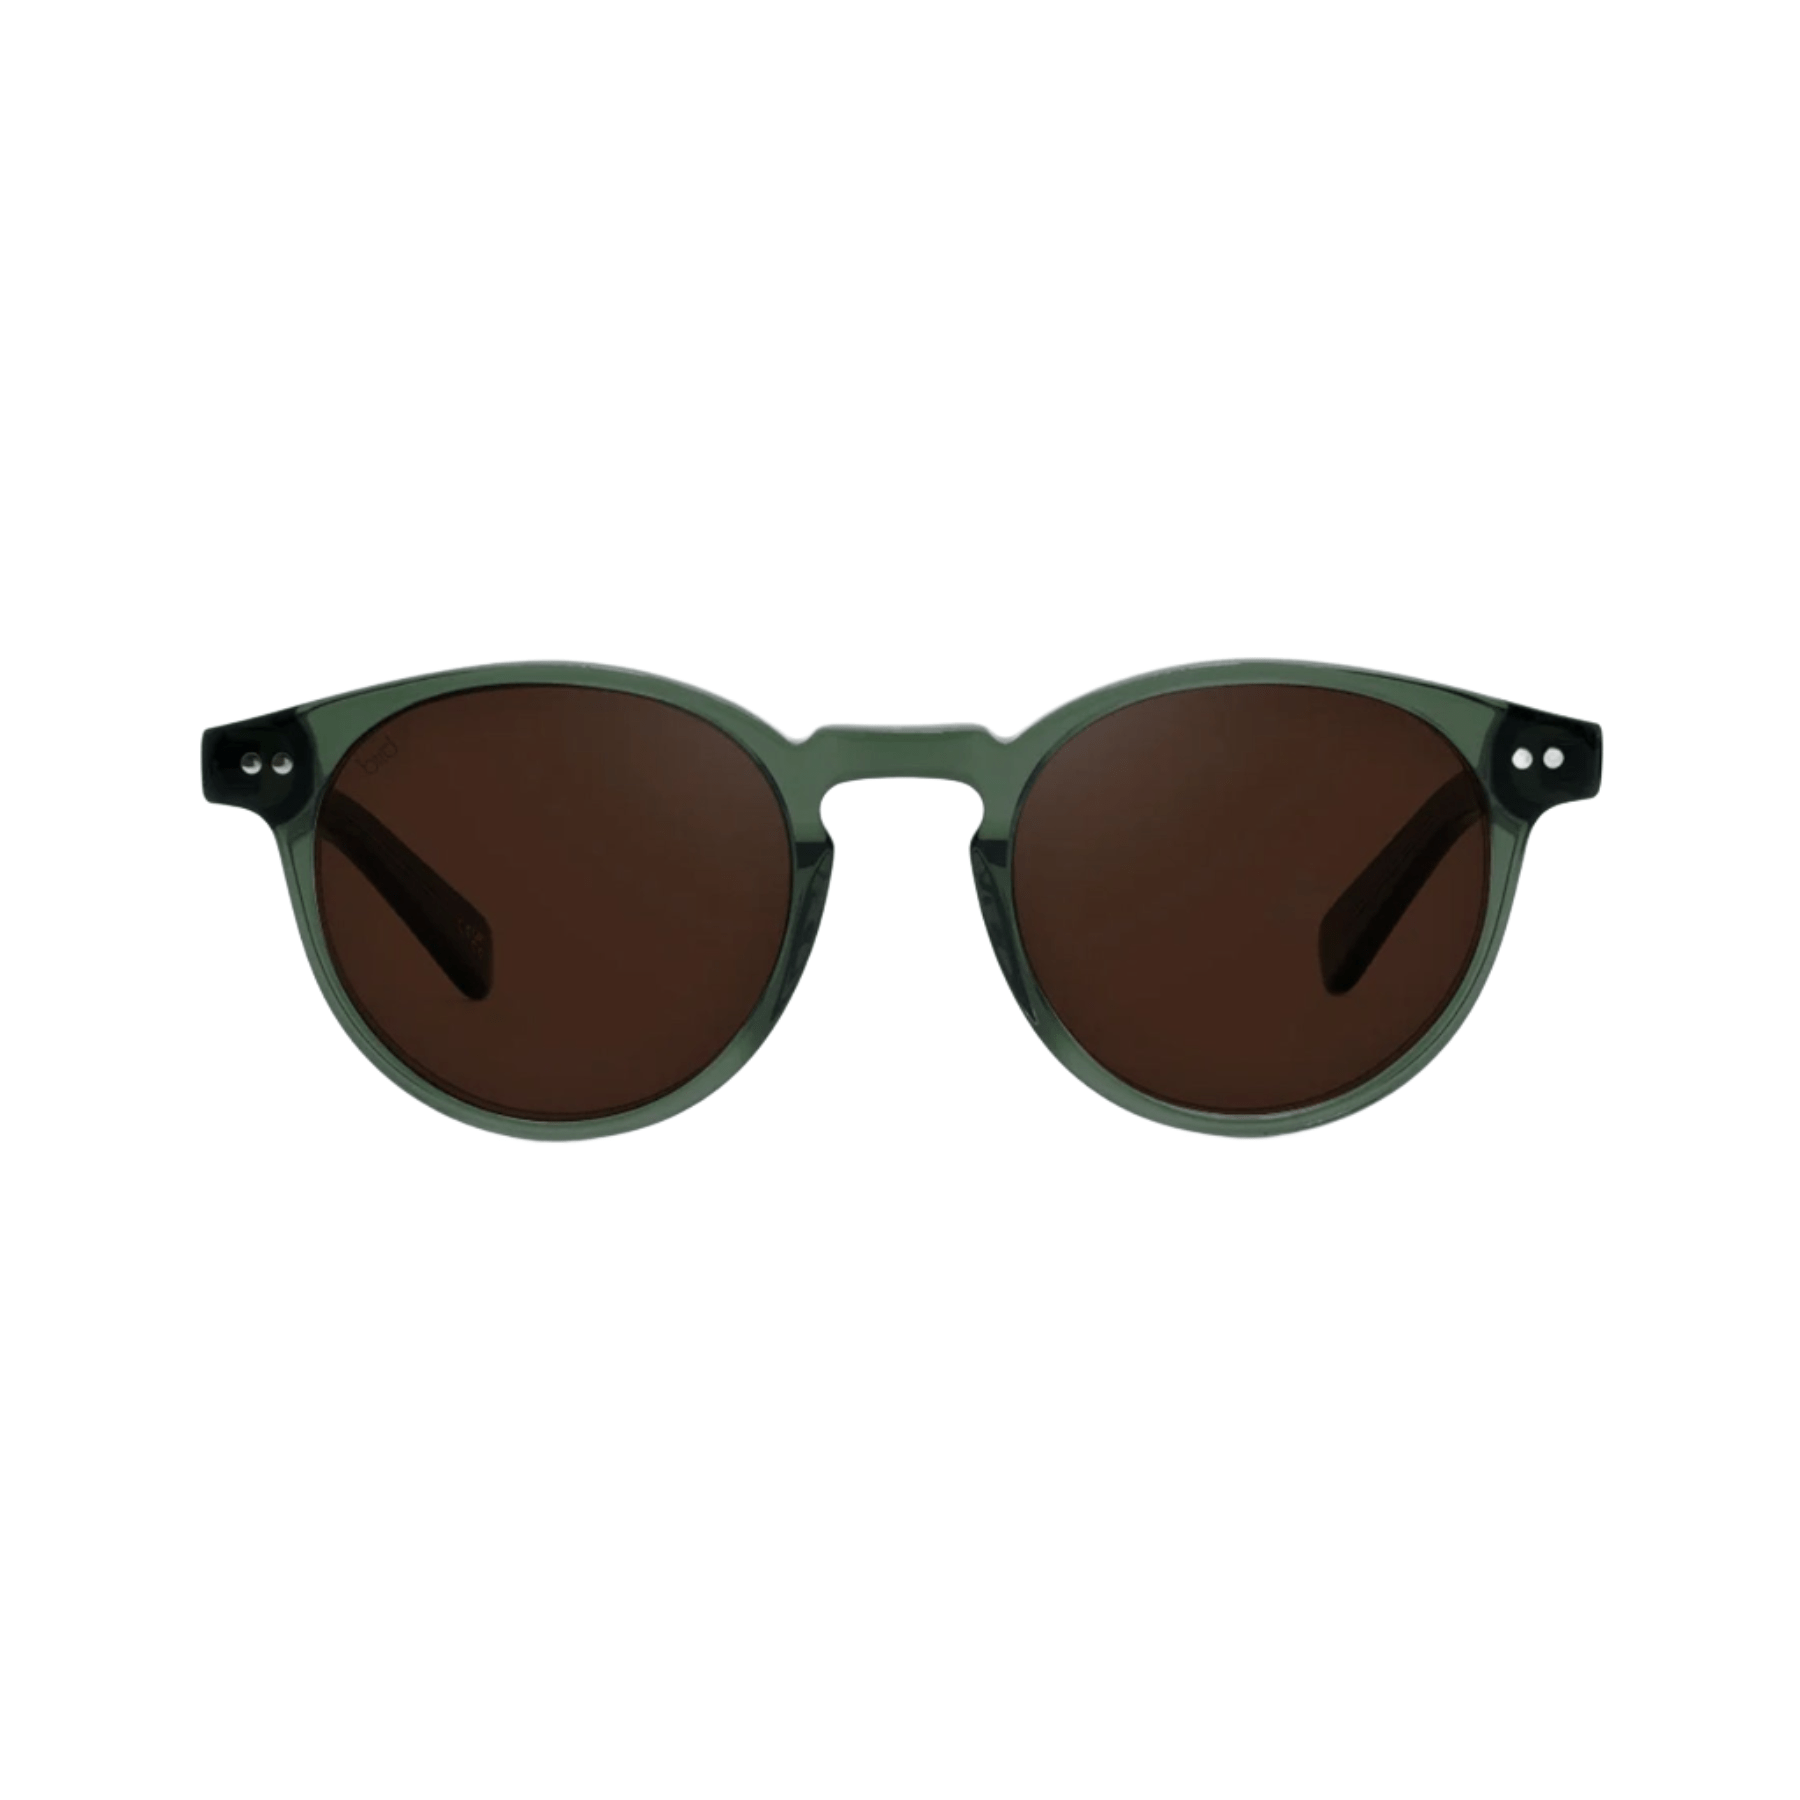 Tawny sunglasses olive